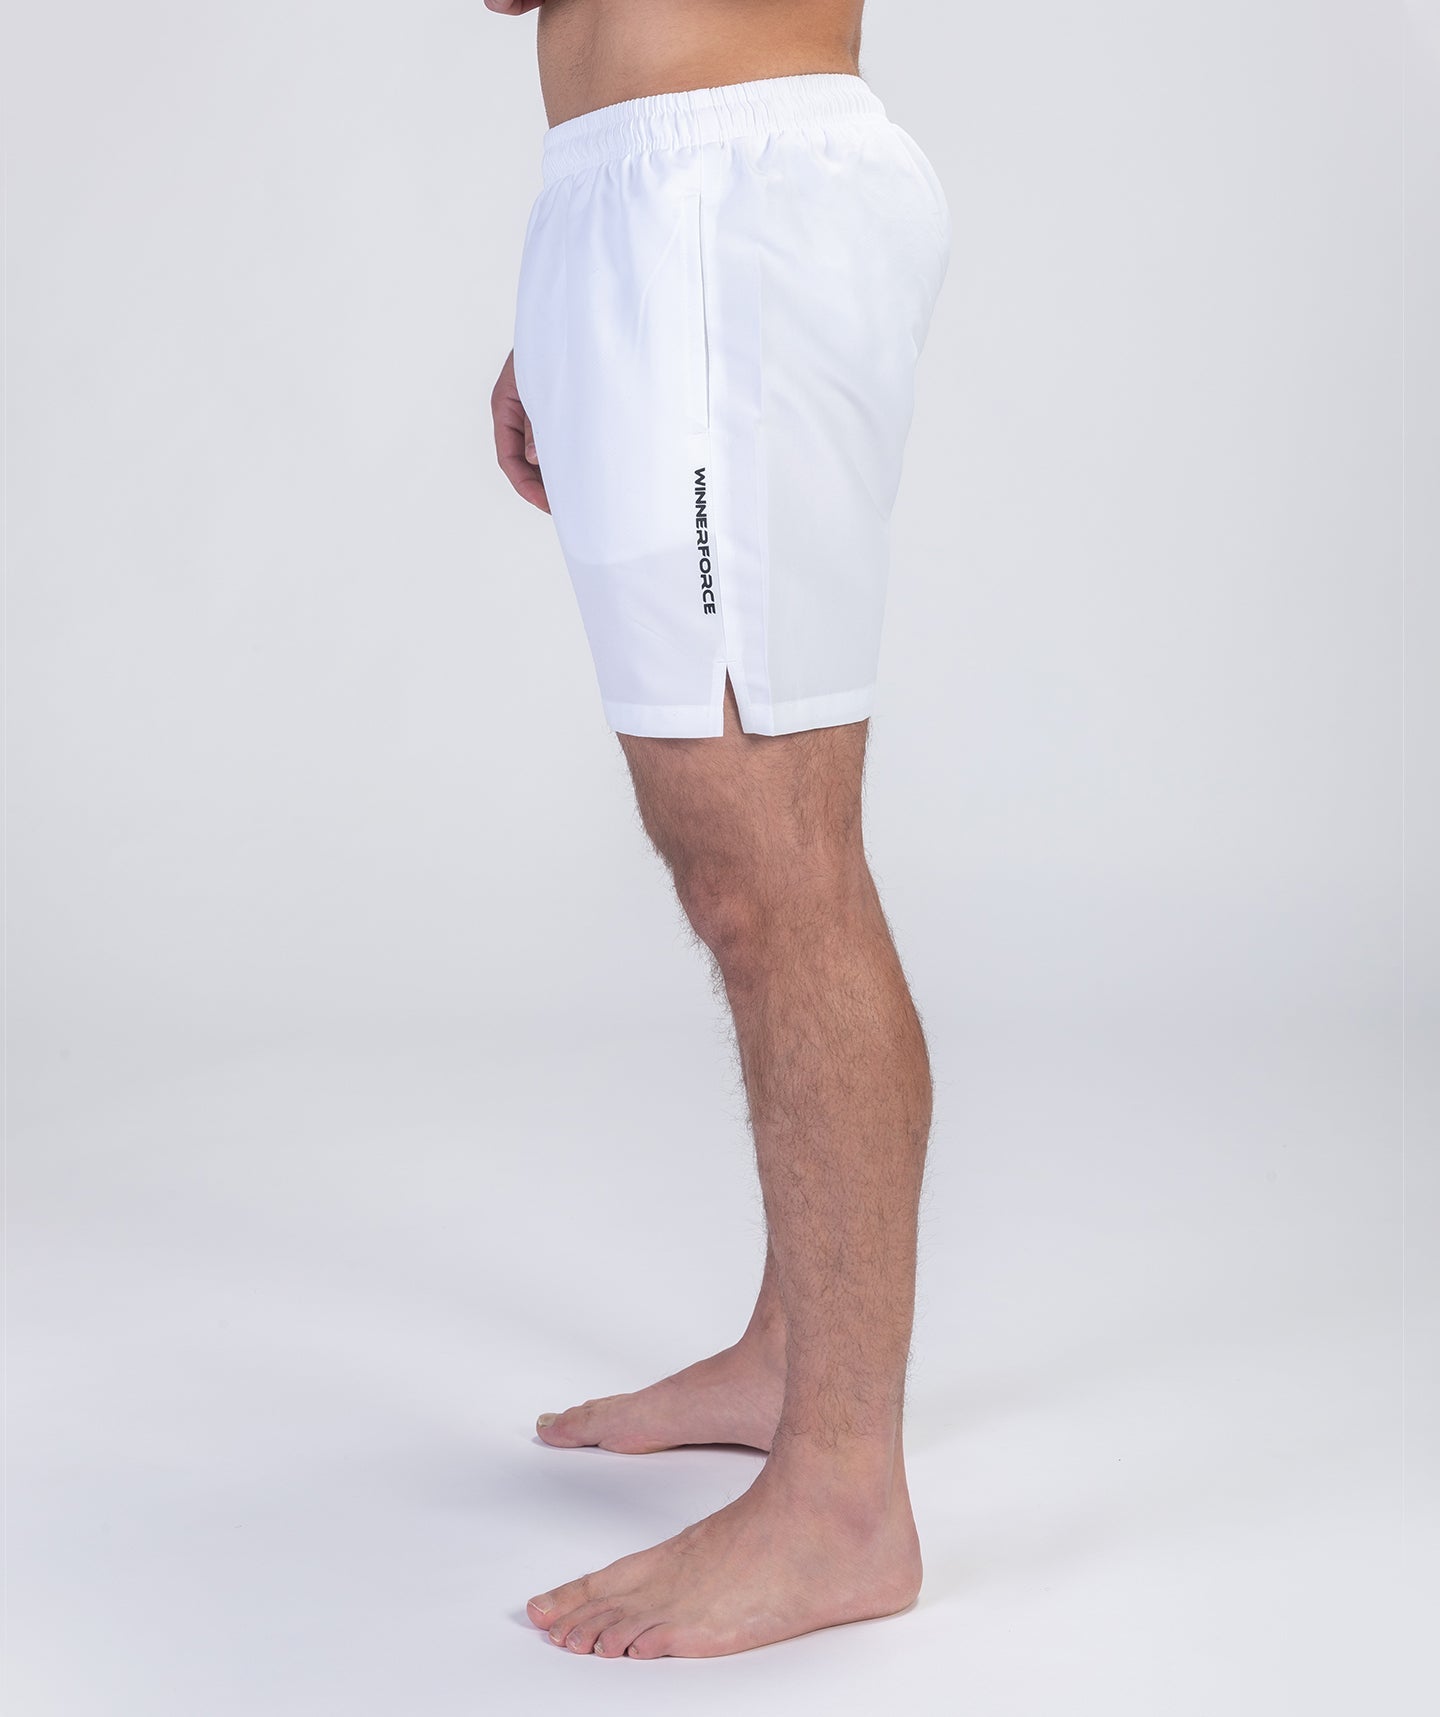 YARD ⚜  
10162-08 ⚜  
A5 ⚜  
PANTONE: White ⚜  
crepe fabric, 100 % polyester, P:White